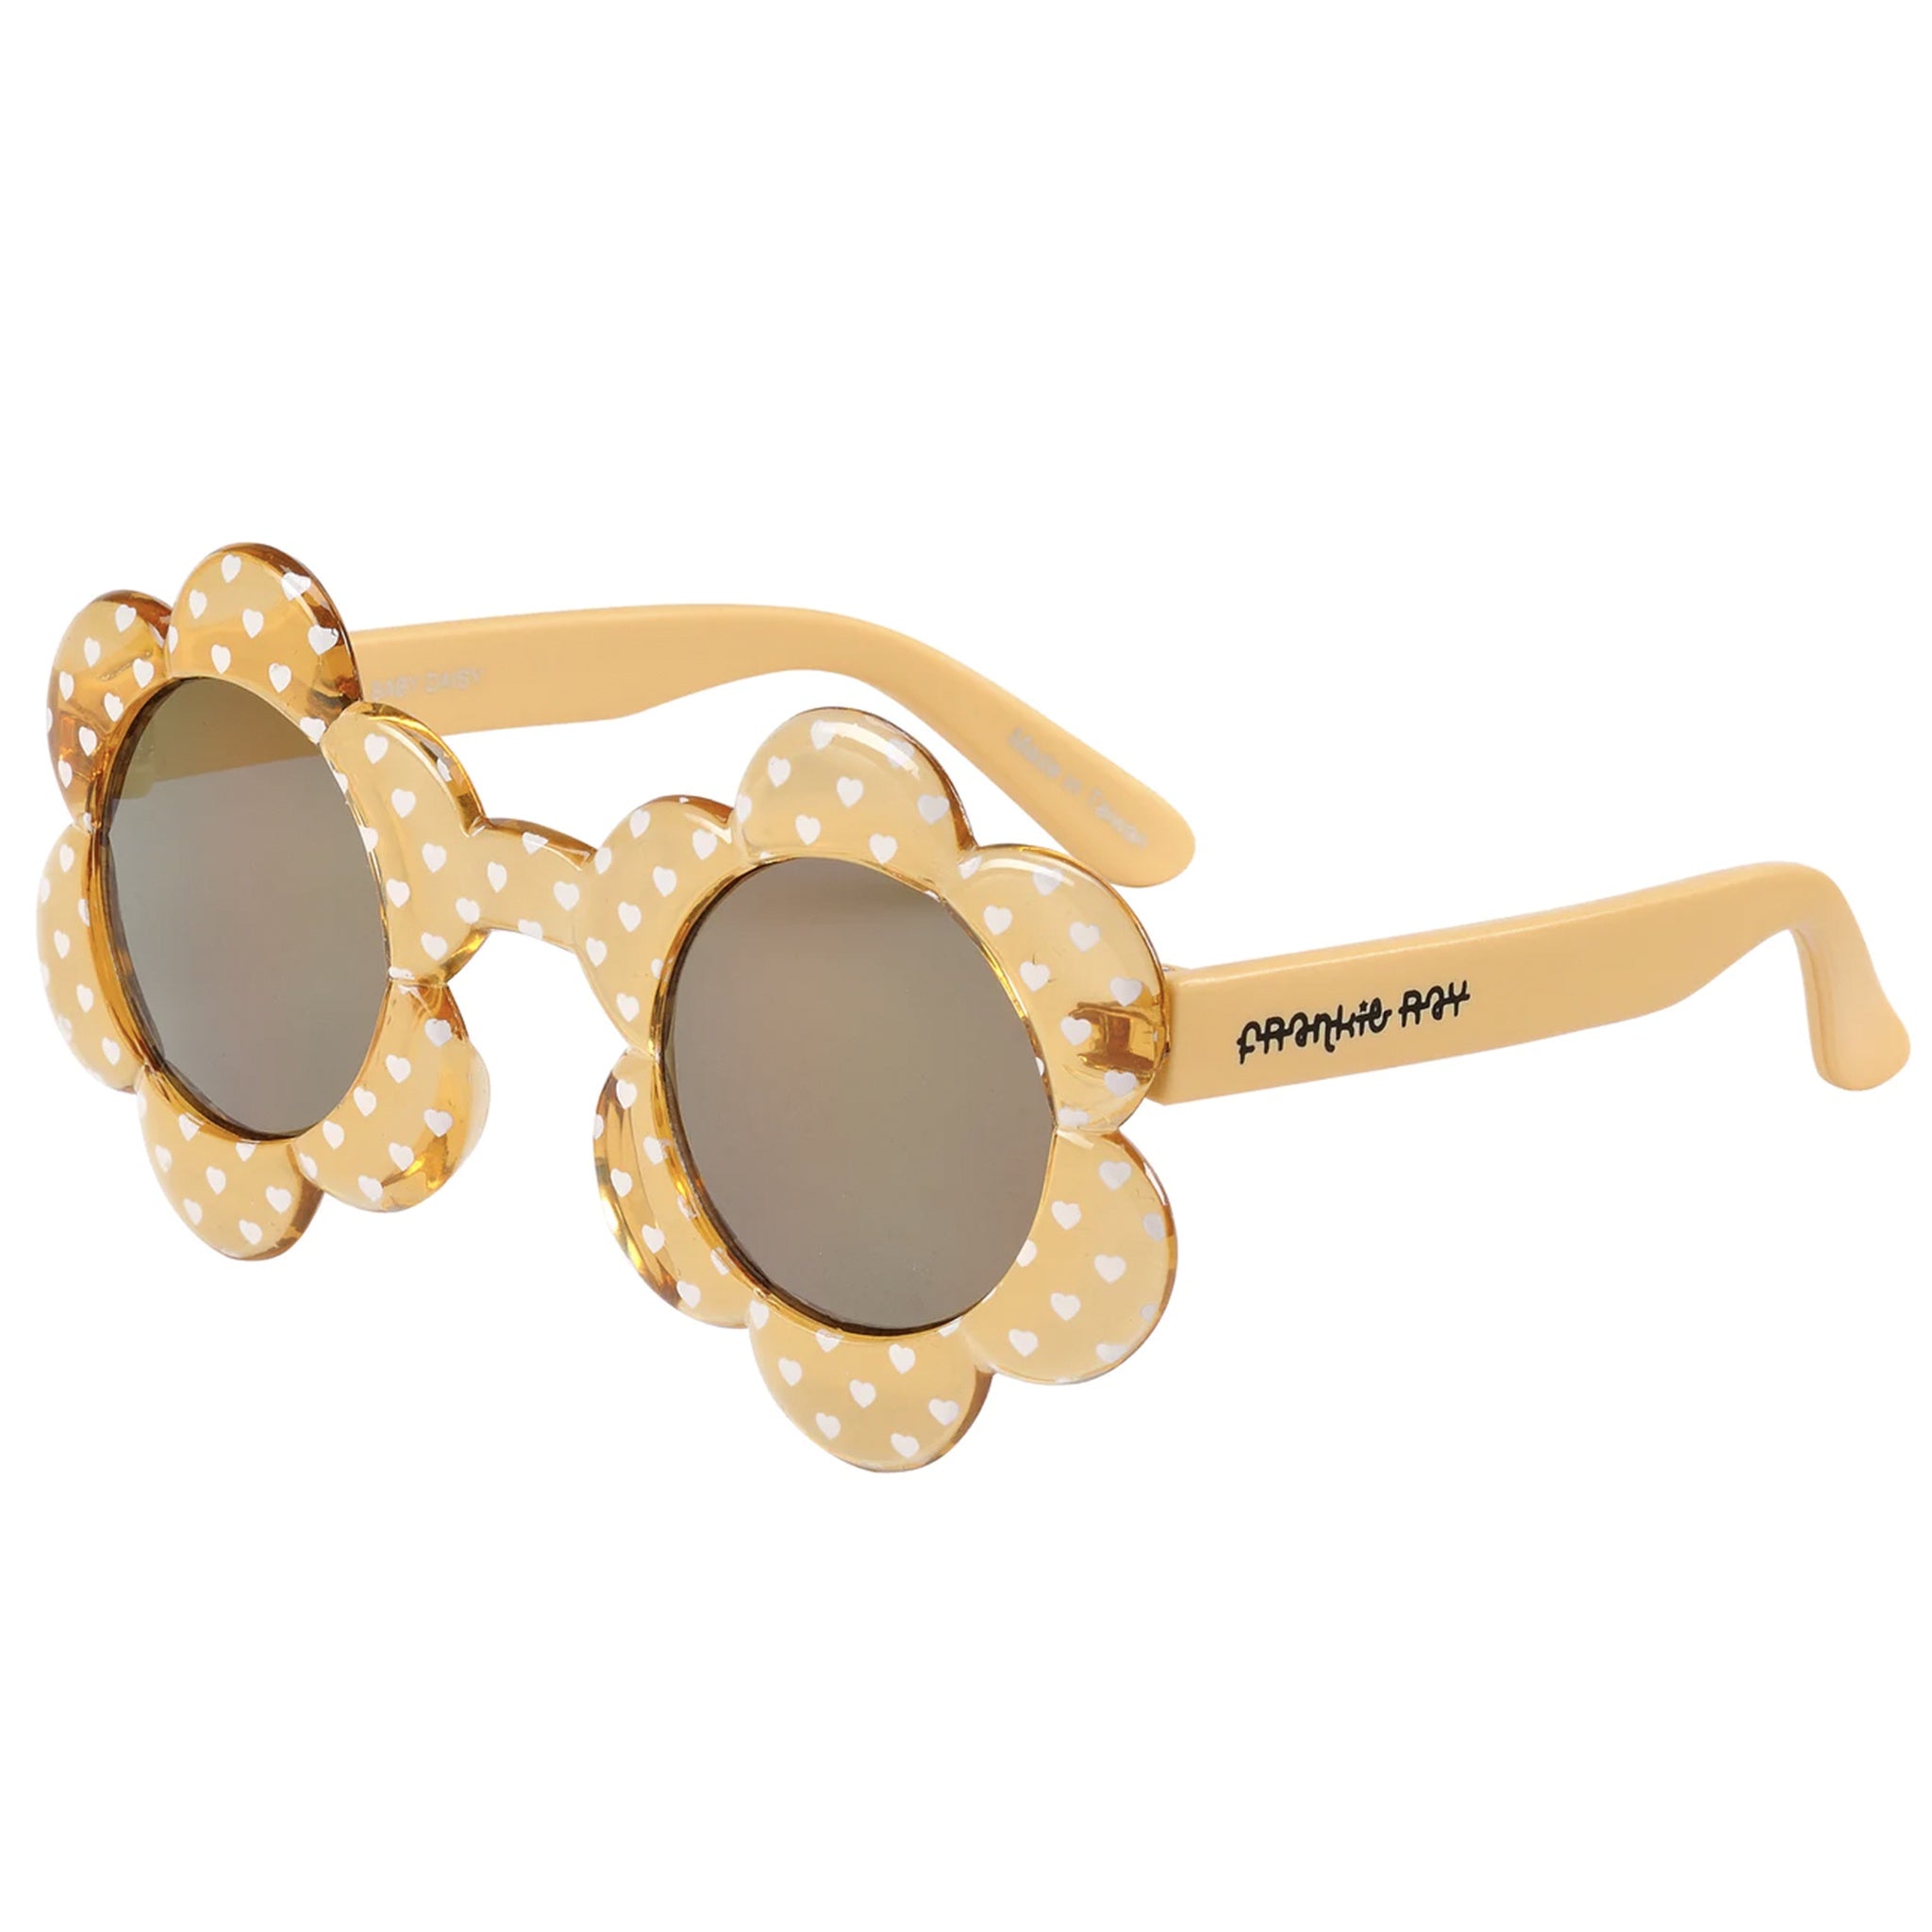 Frankie Ray Kid's Sunglasses Baby Daisy - Crystal Yellow with White Heart